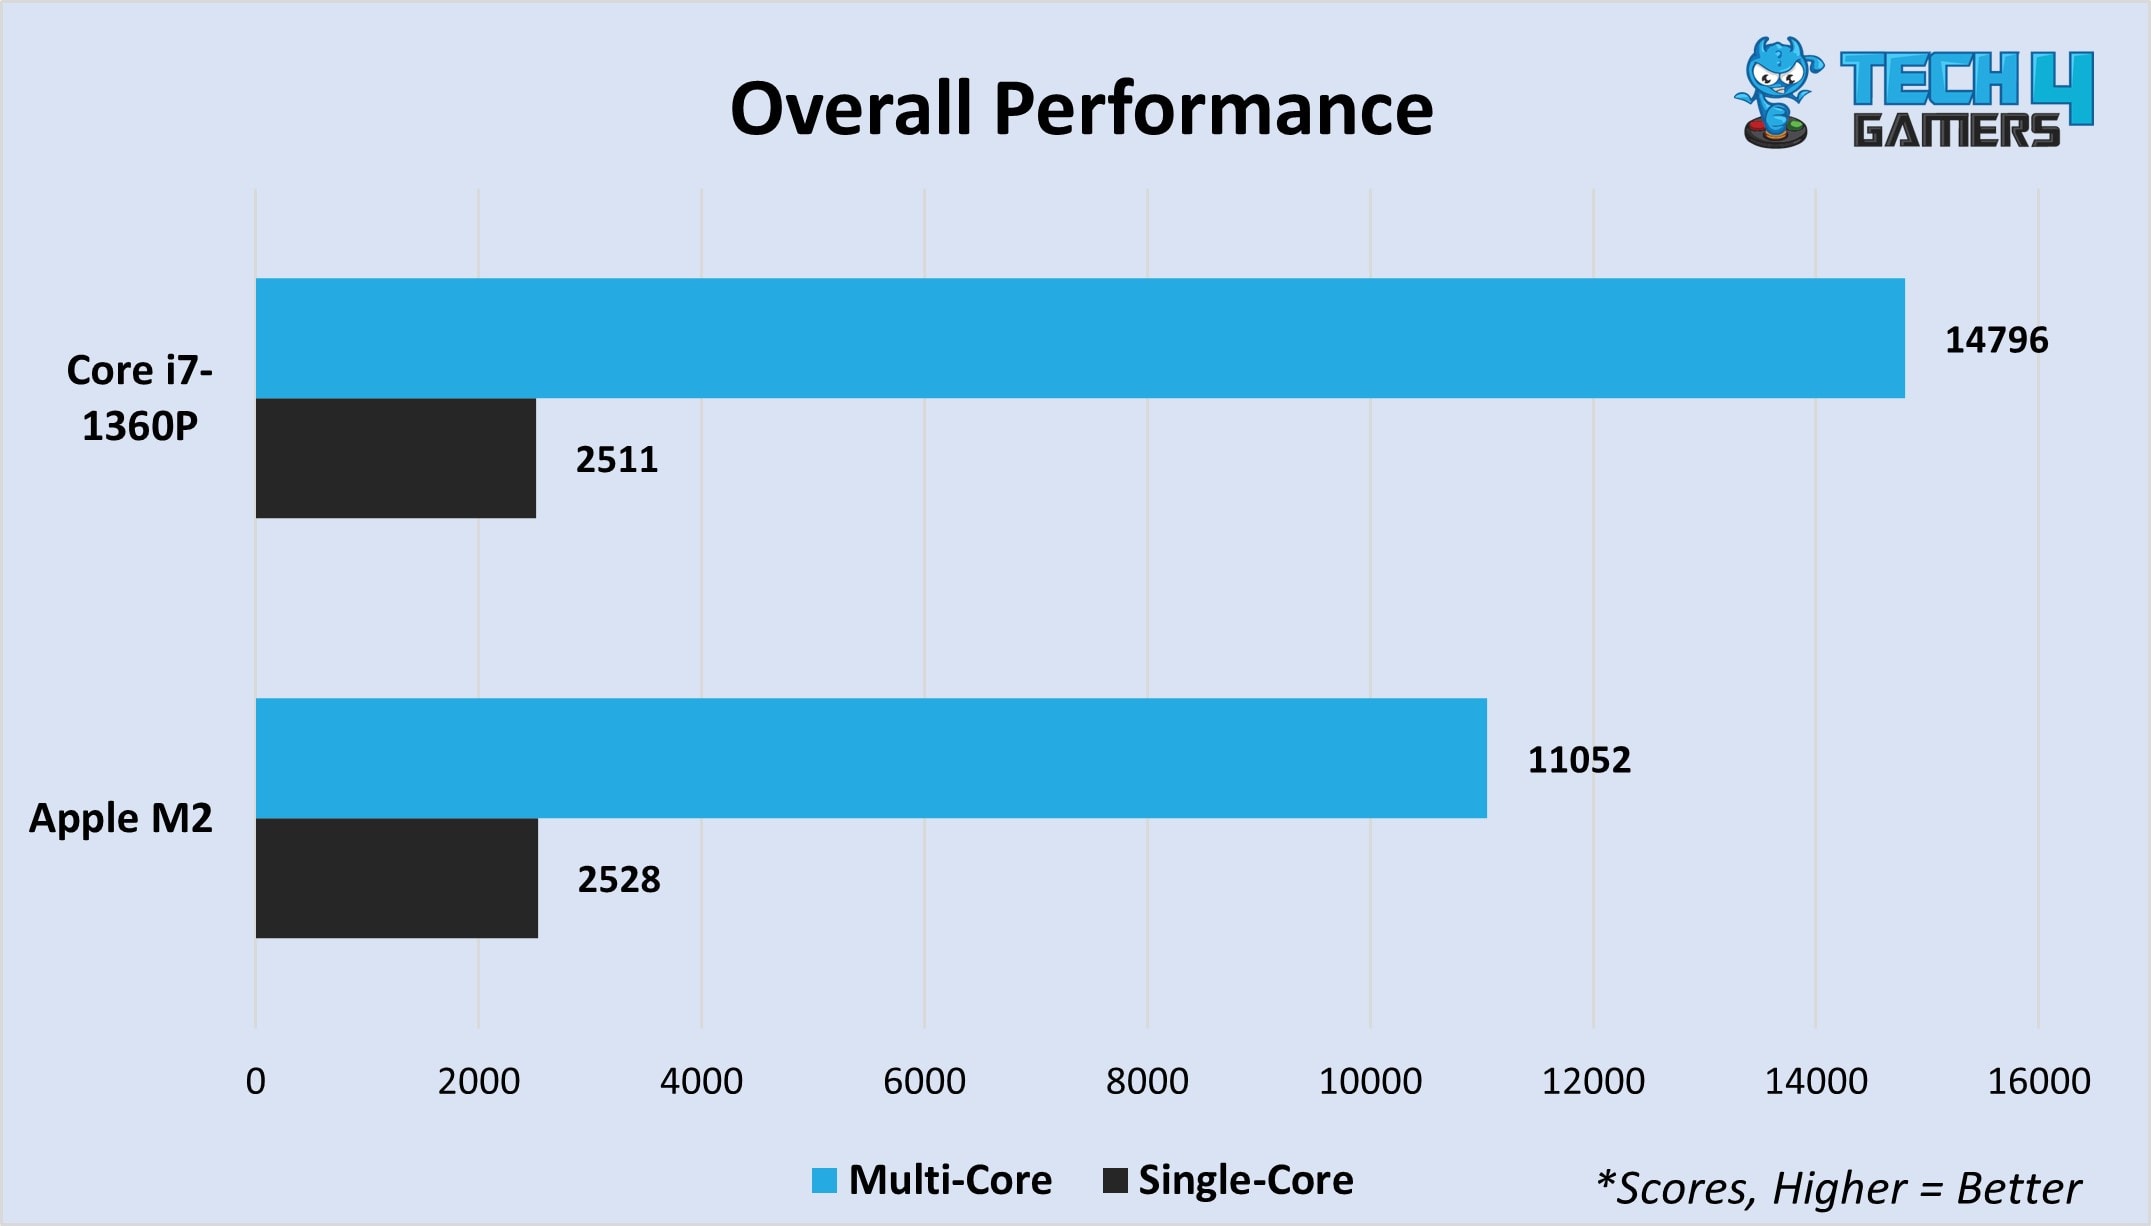 Overall multi-core and single-core performance